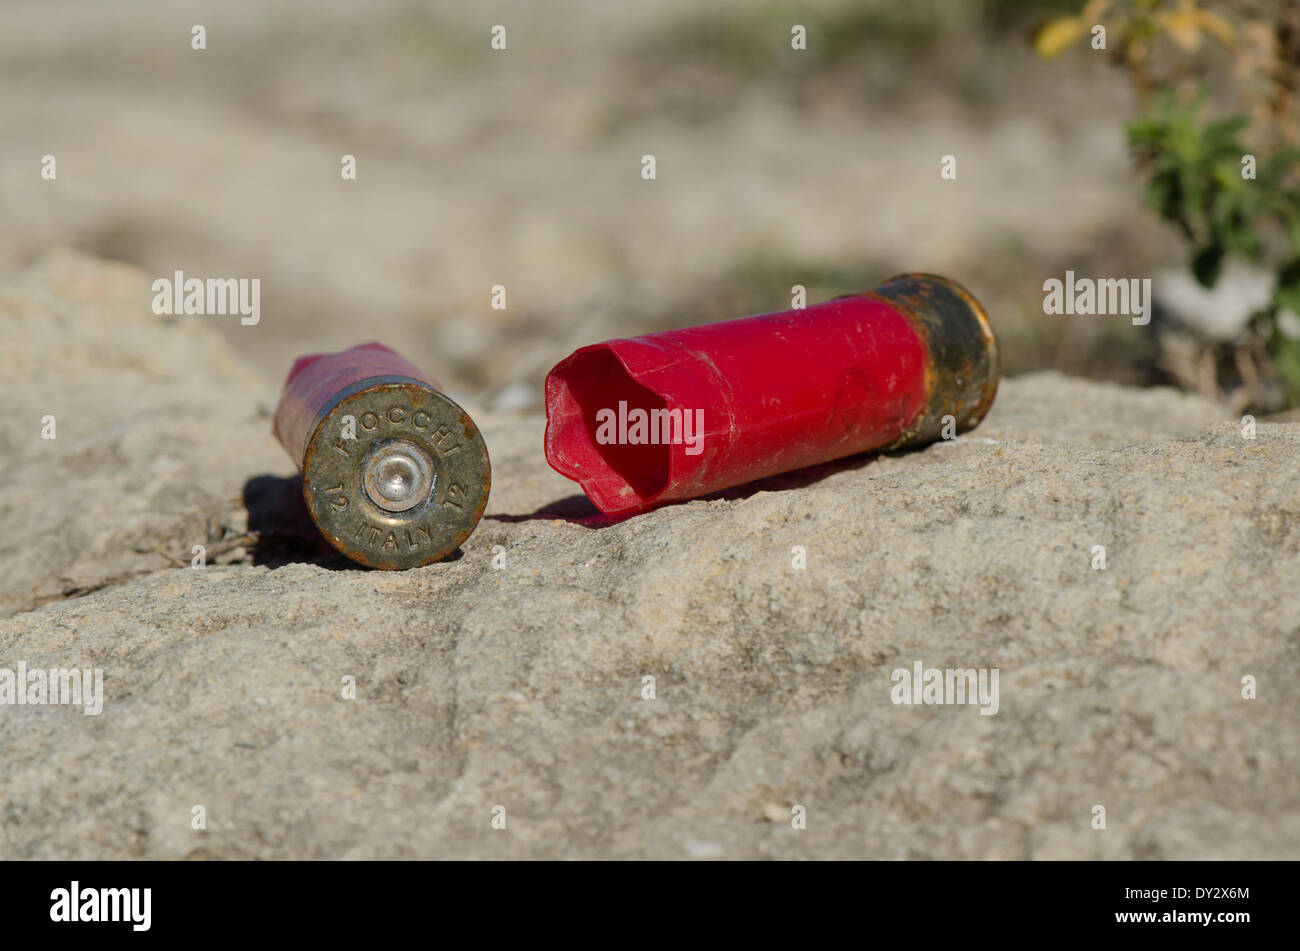 Svuotare i serbatoi shotgun munizioni lasciati da cacciatori in campagna, Spagna. Foto Stock